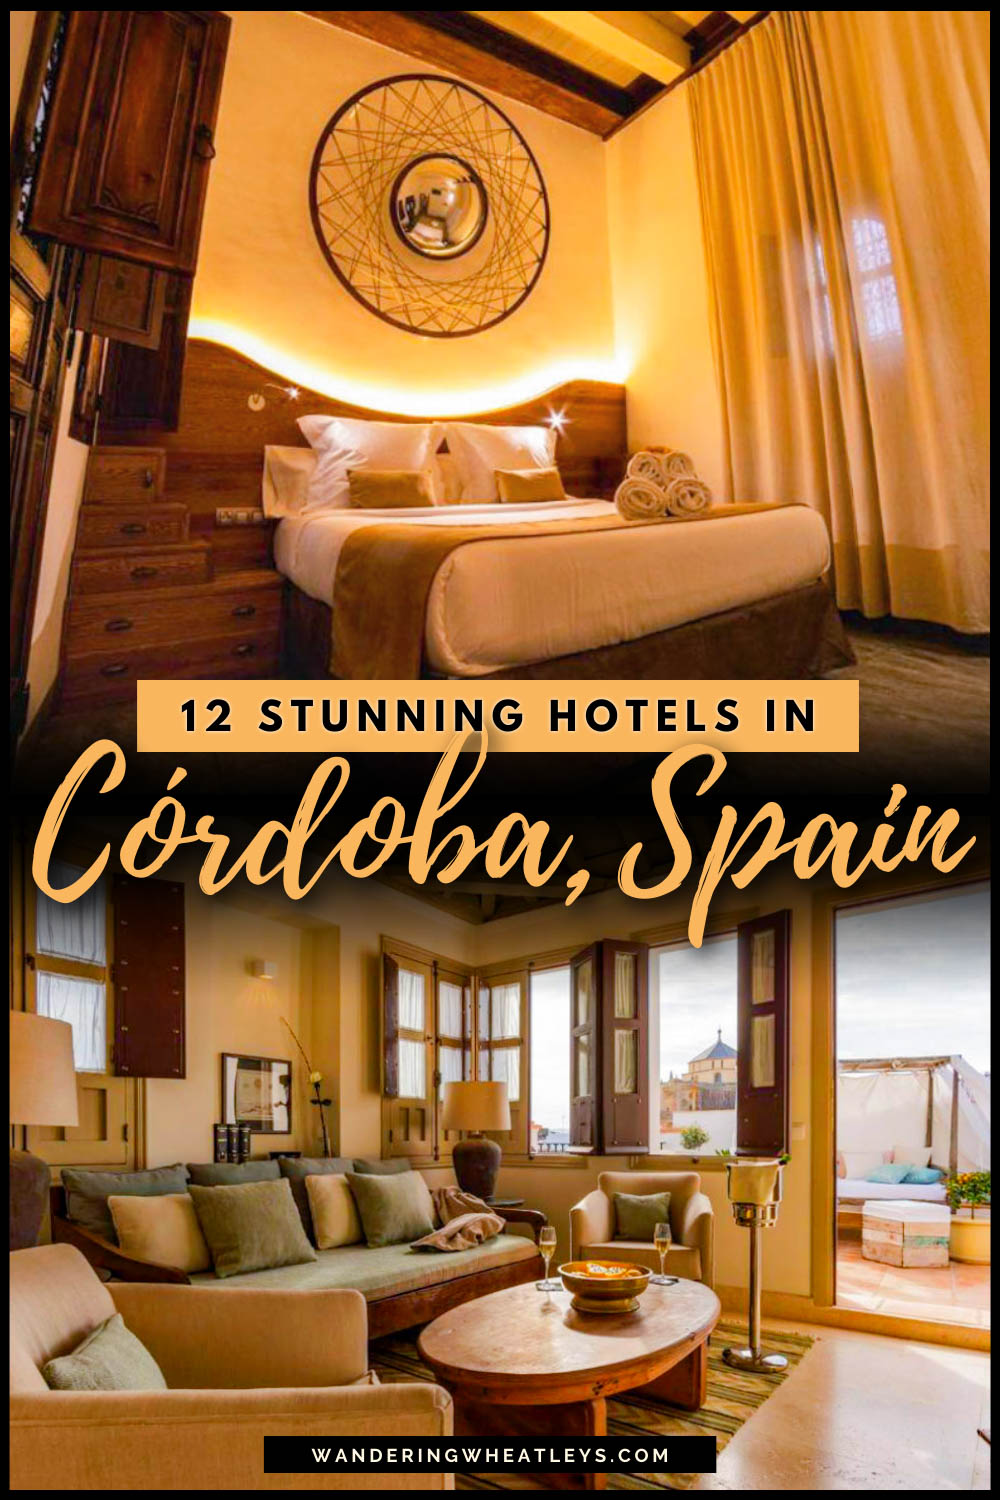 The Best Hotels in Cordoba, Spain